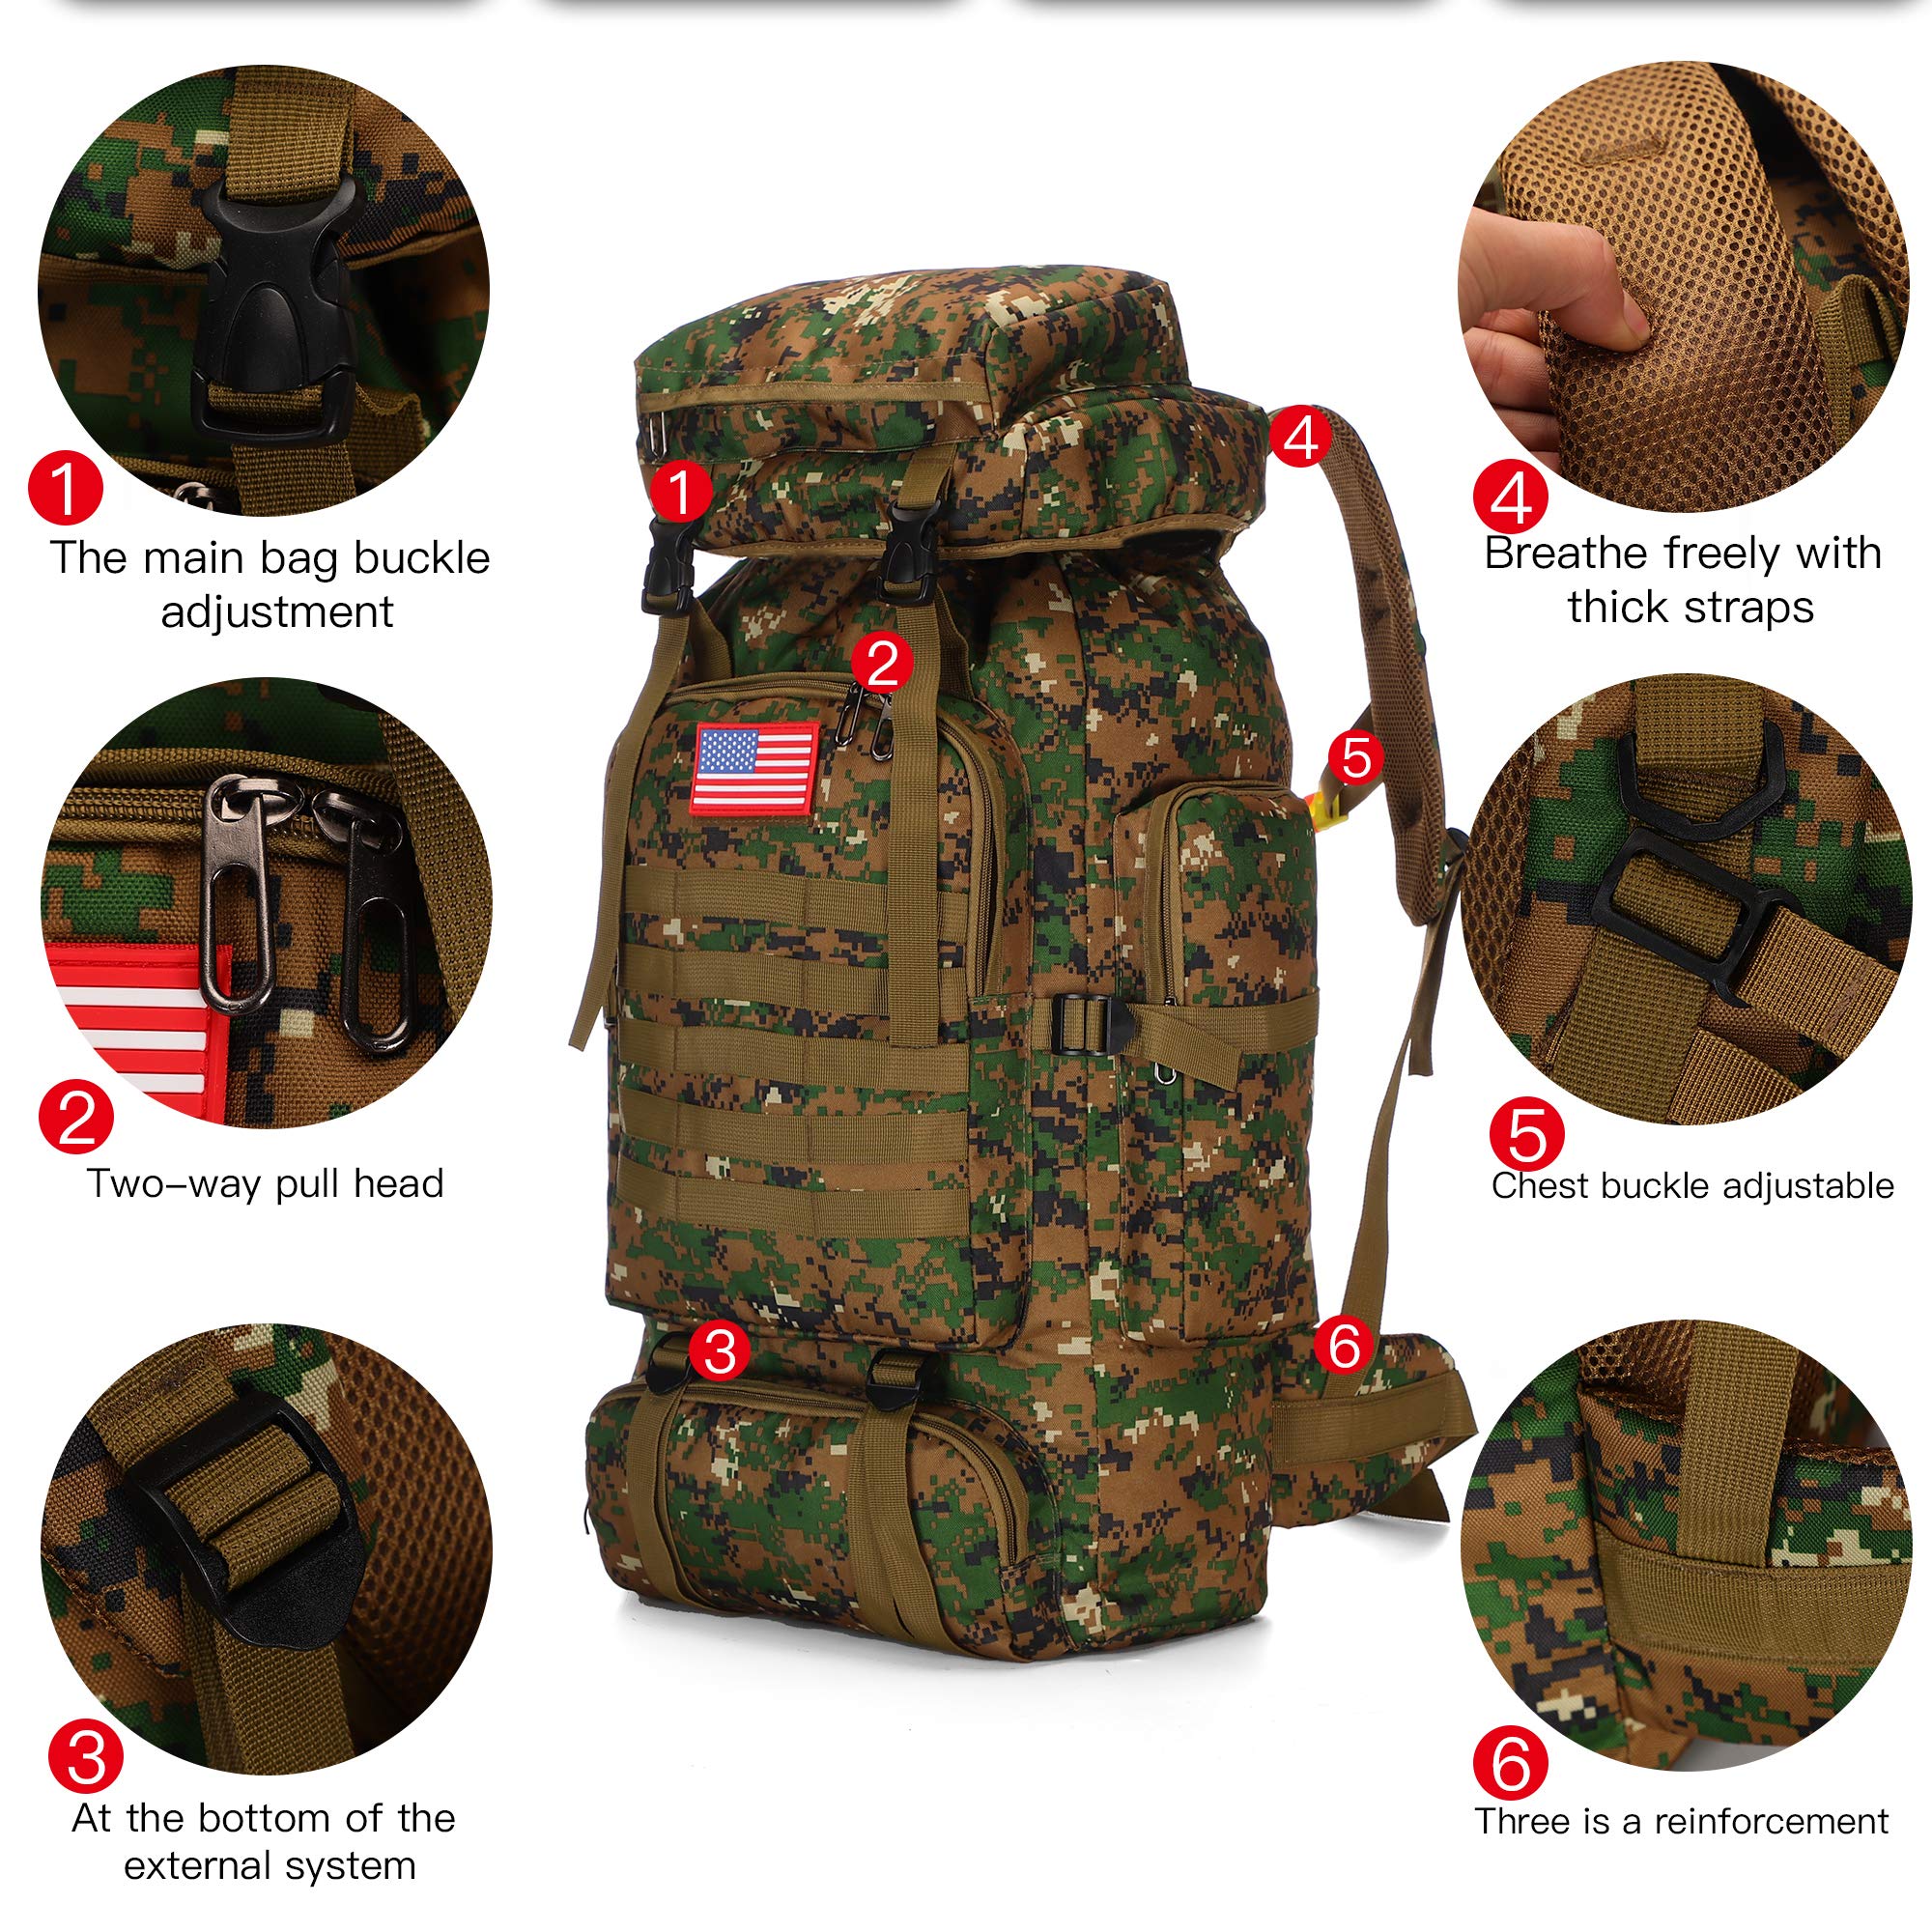 70l Hiking Backpack for Men Waterproof Military Camping Rucksack Travel Daypack